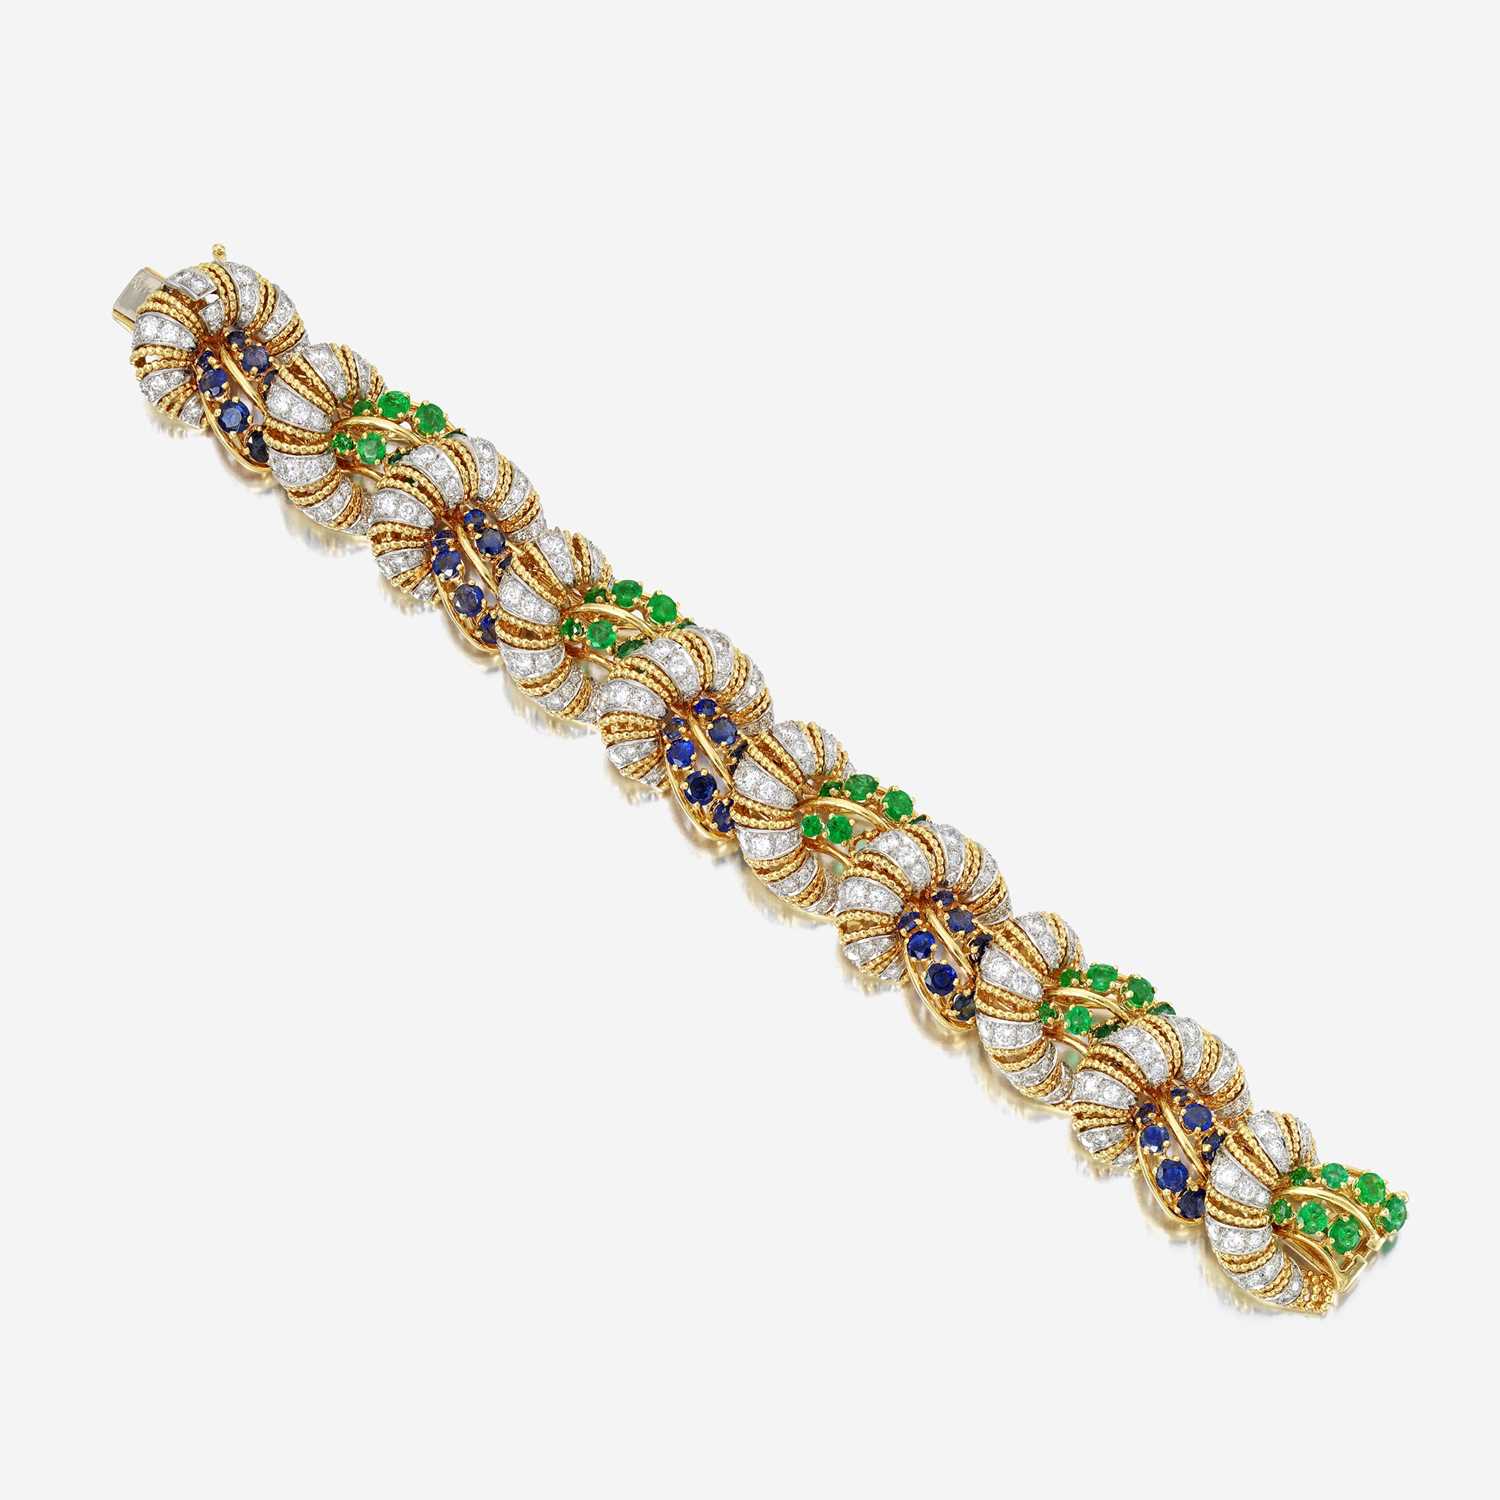 Lot 93 - A diamond, sapphire, emerald, and eighteen karat gold bracelet, Tiffany & Co.